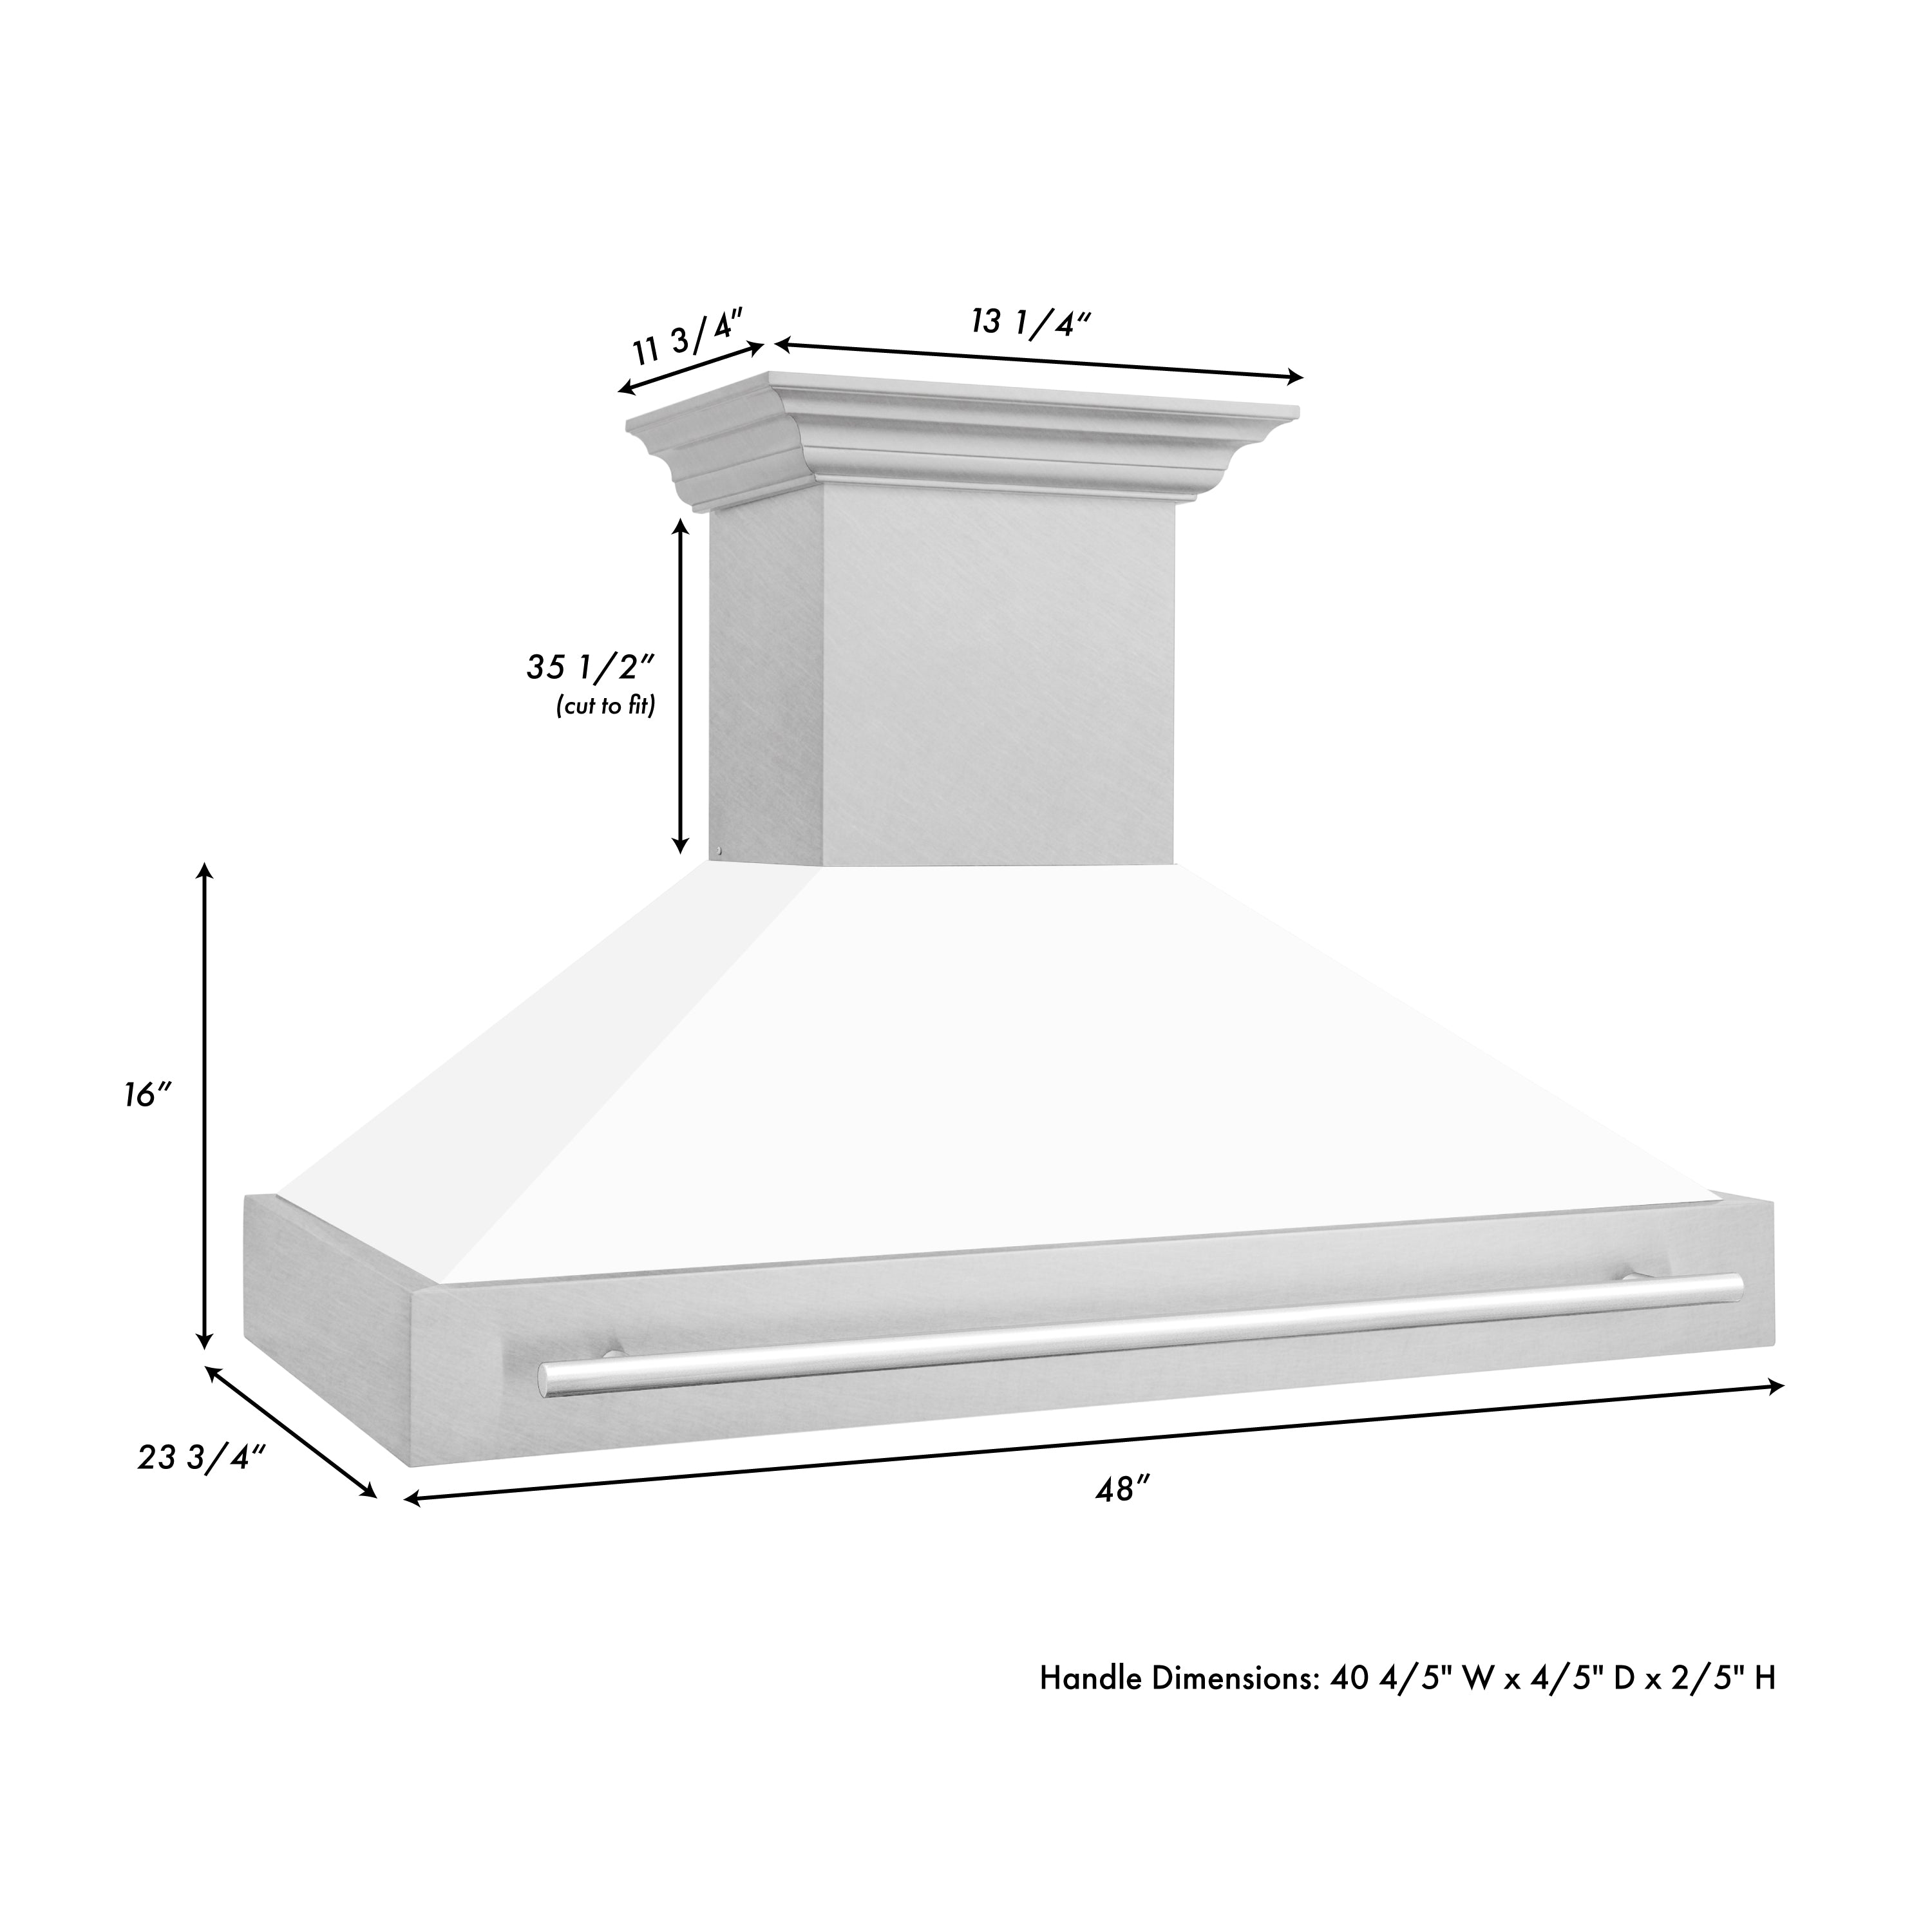 ZLINE 48" Fingerprint Resistant Stainless Steel Range Hood (8654SNX-48)